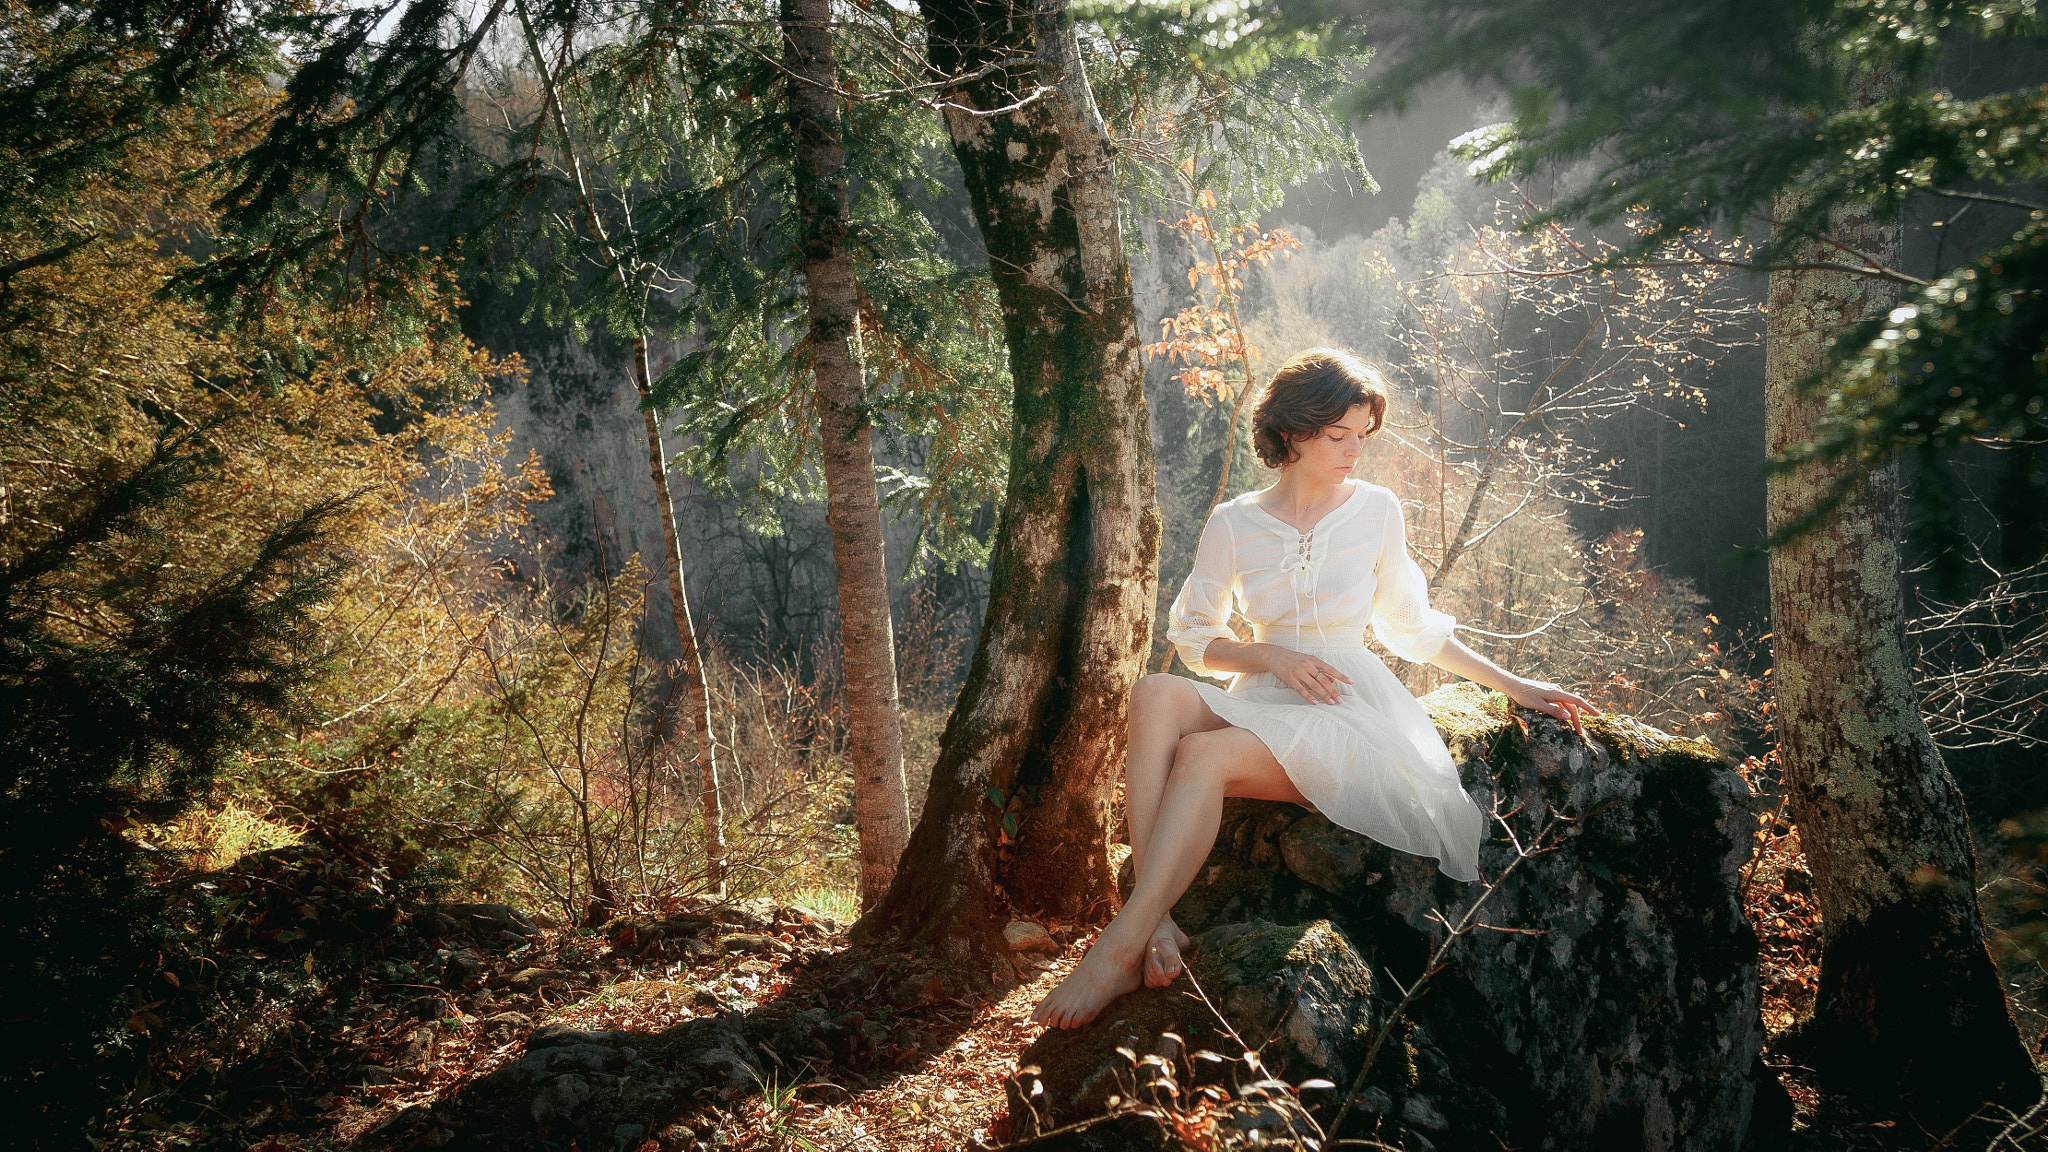 People 2048x1152 Andrew Vasiliev women model women outdoors nature trees barefoot legs